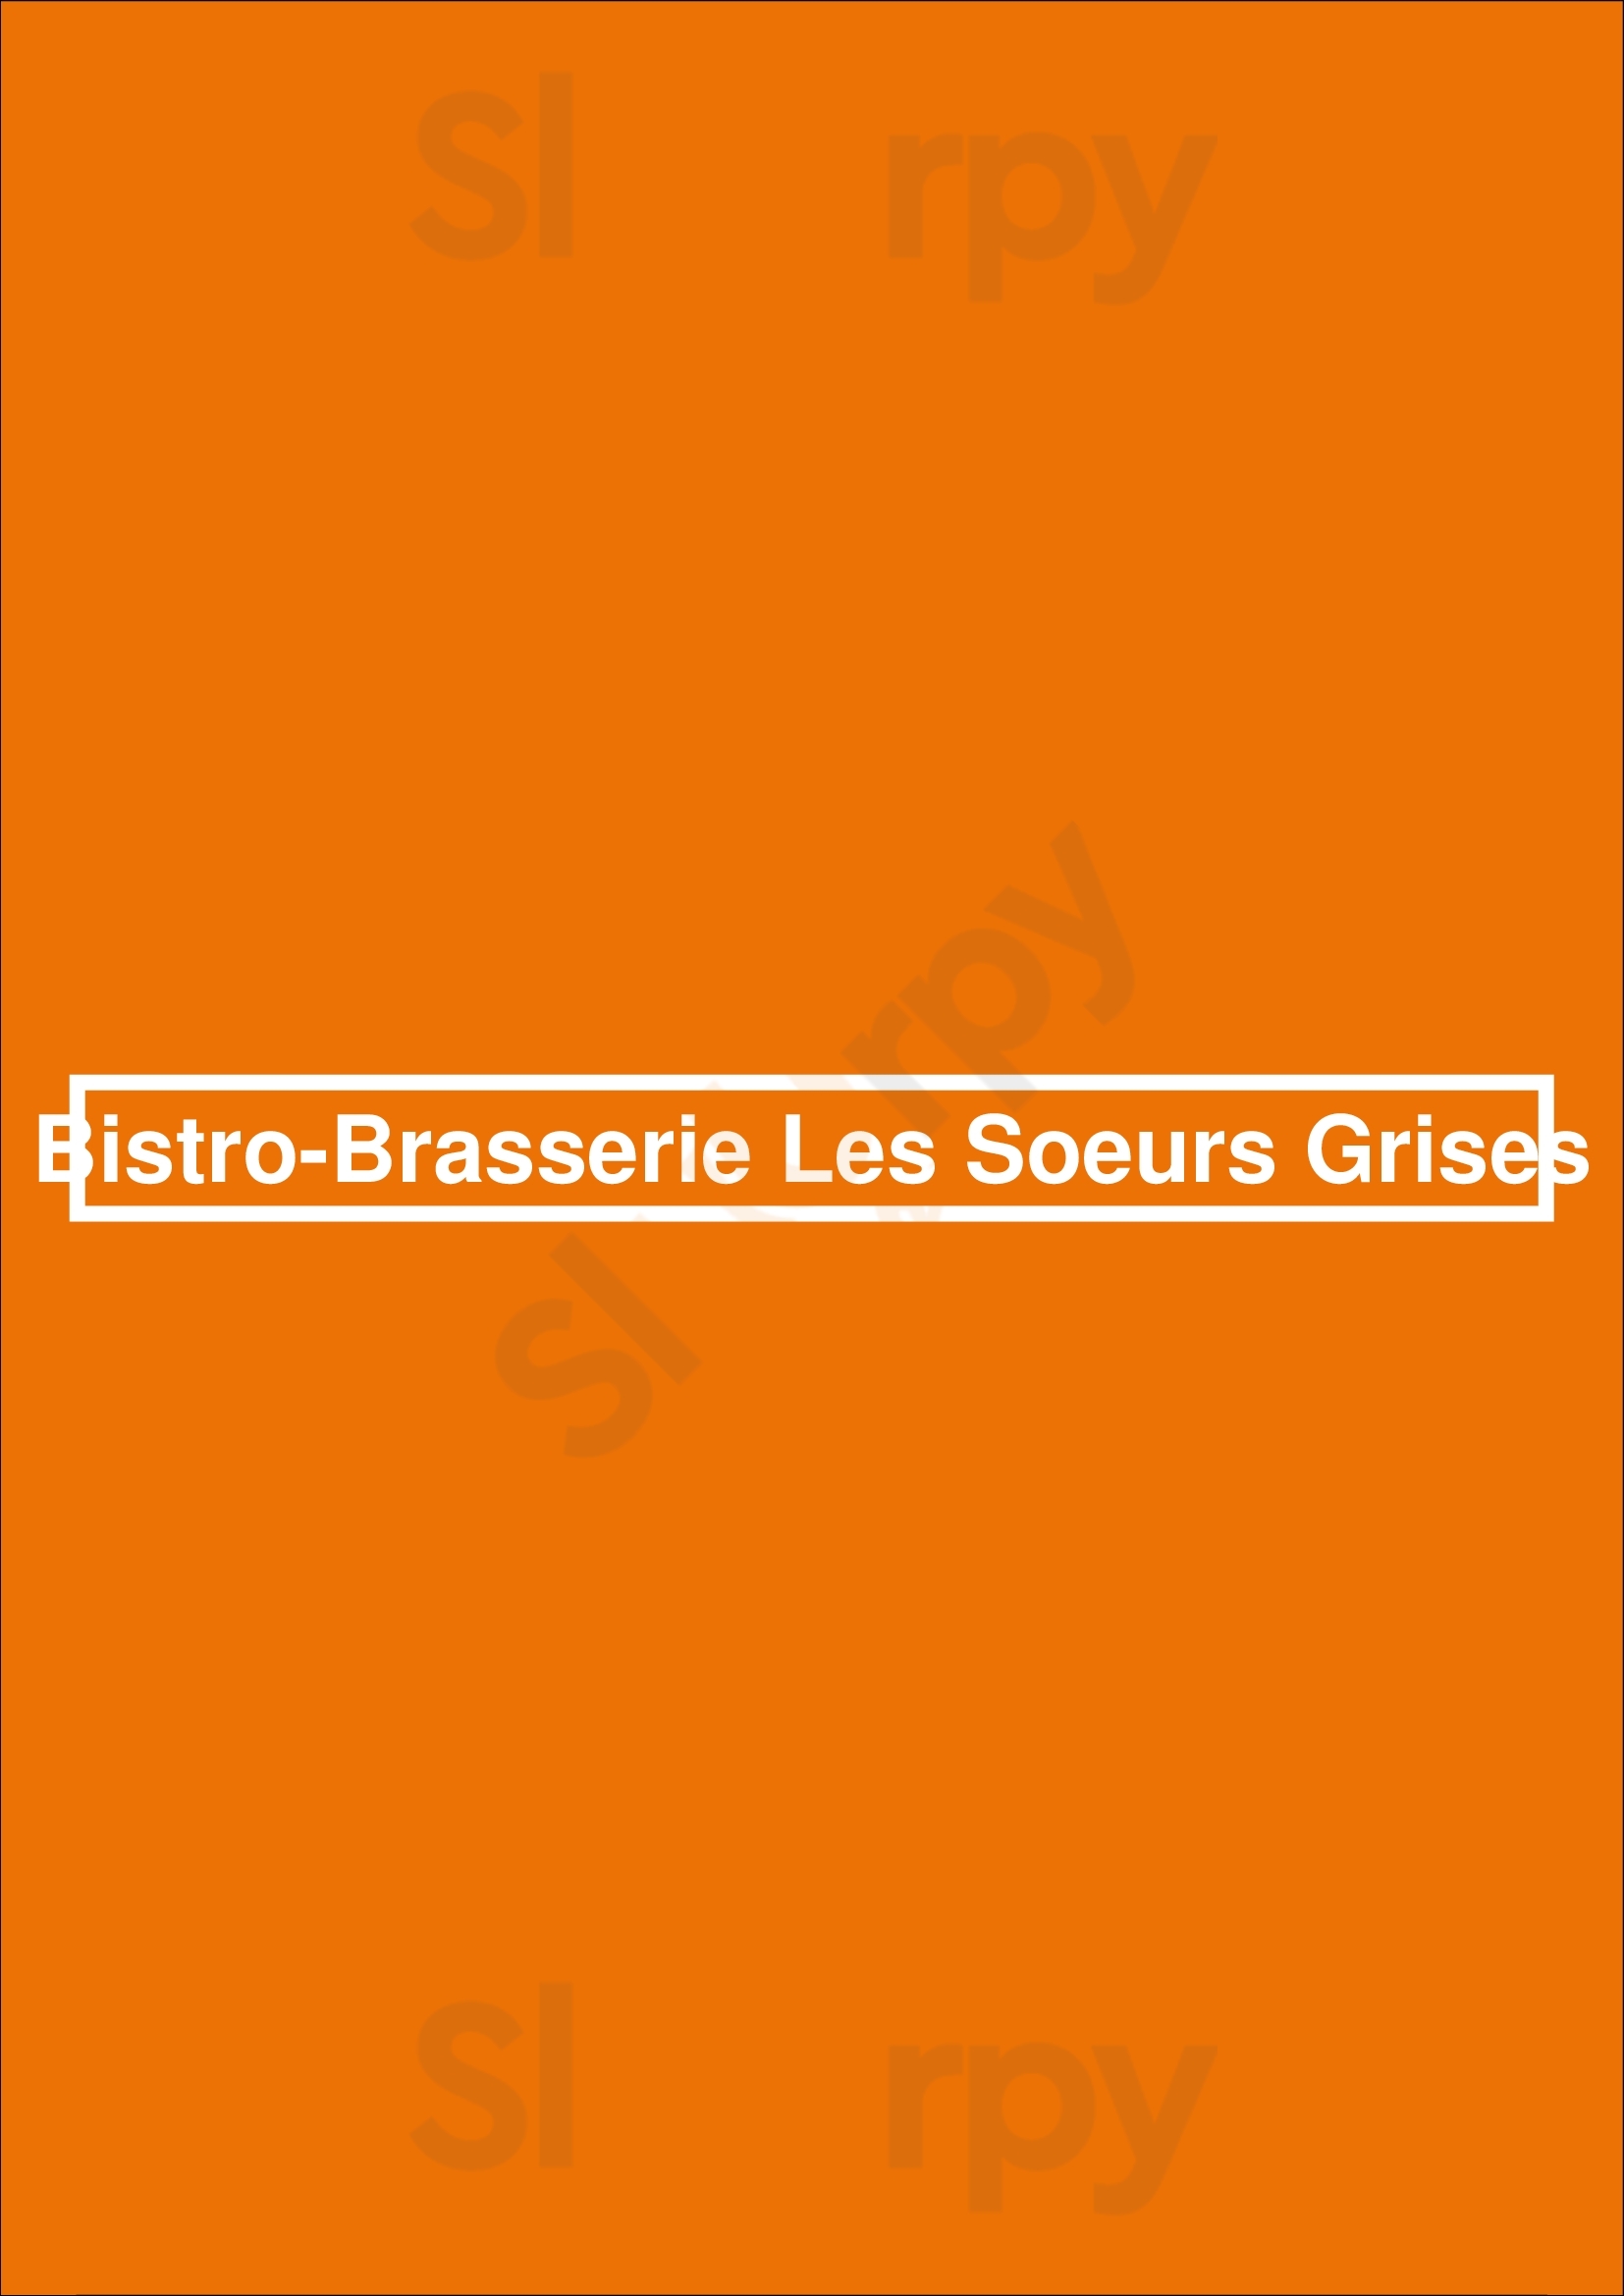 Bistro-brasserie Les Soeurs Grises Montreal Menu - 1